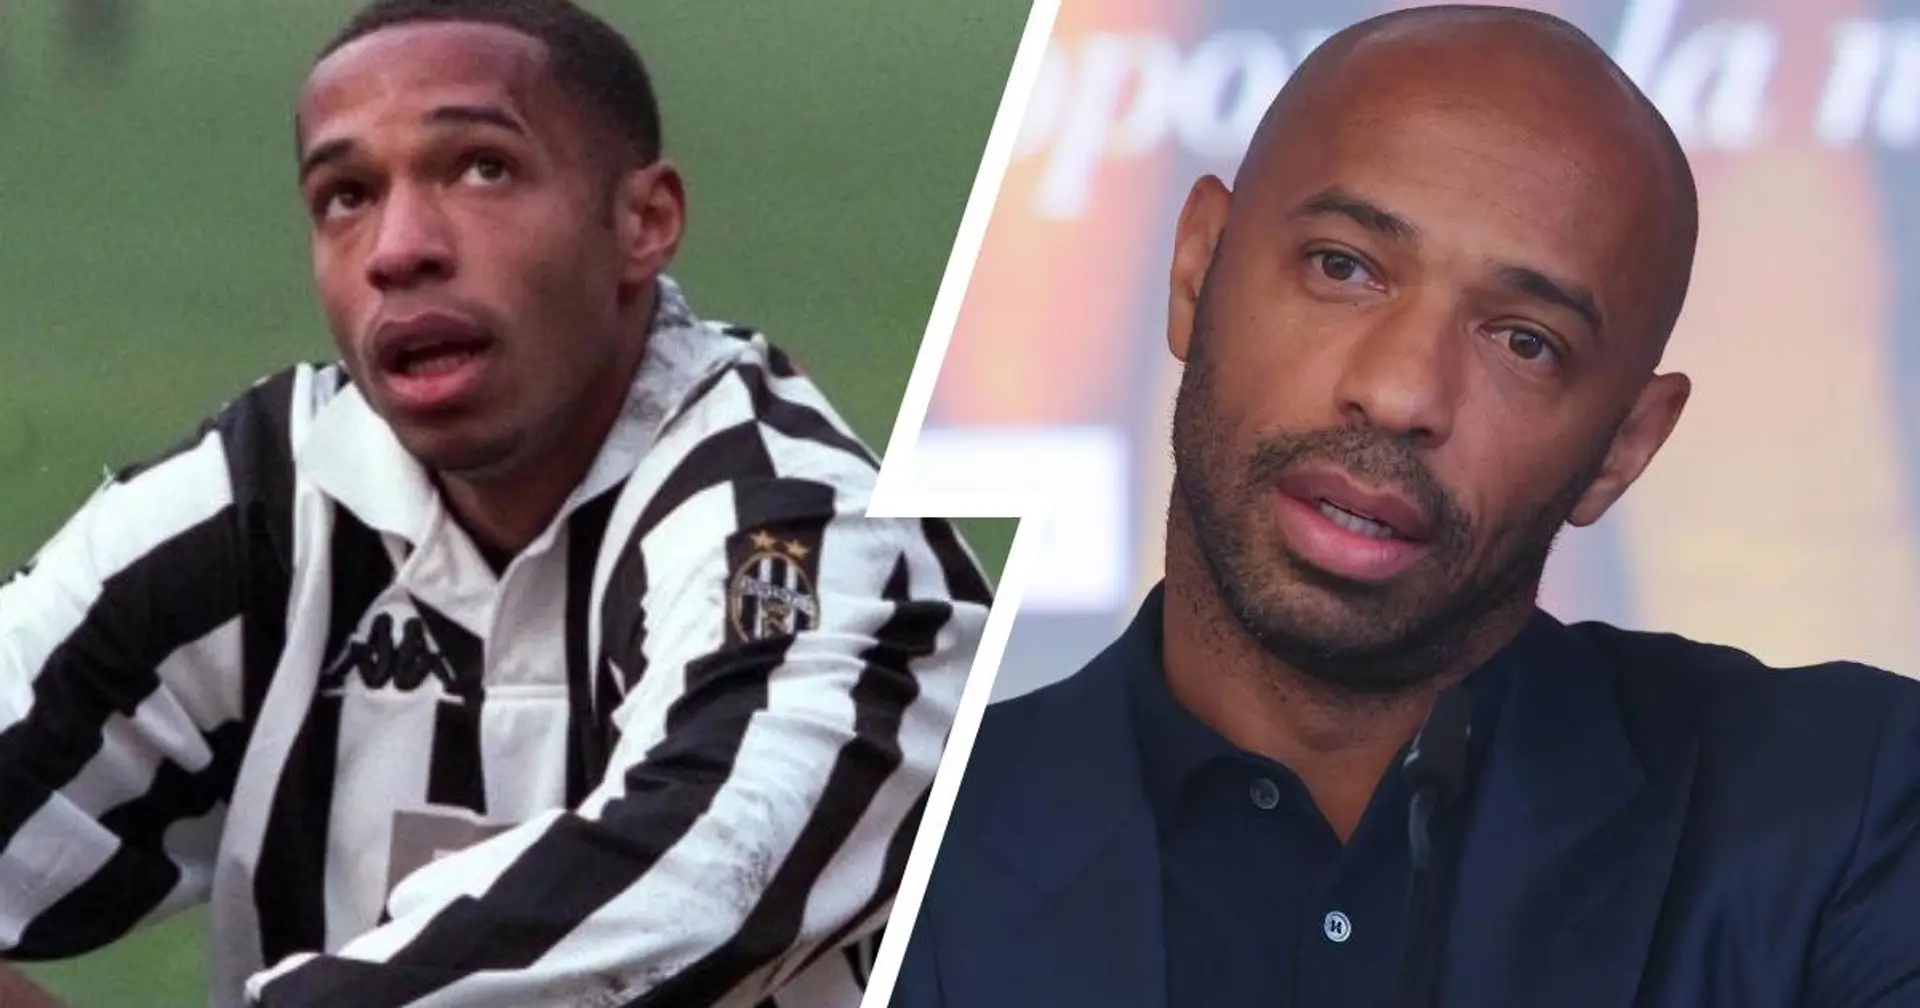 Thierry Henry al veleno: "Ho amato la Juventus, sarei rimasto se non fosse stato per una persona"